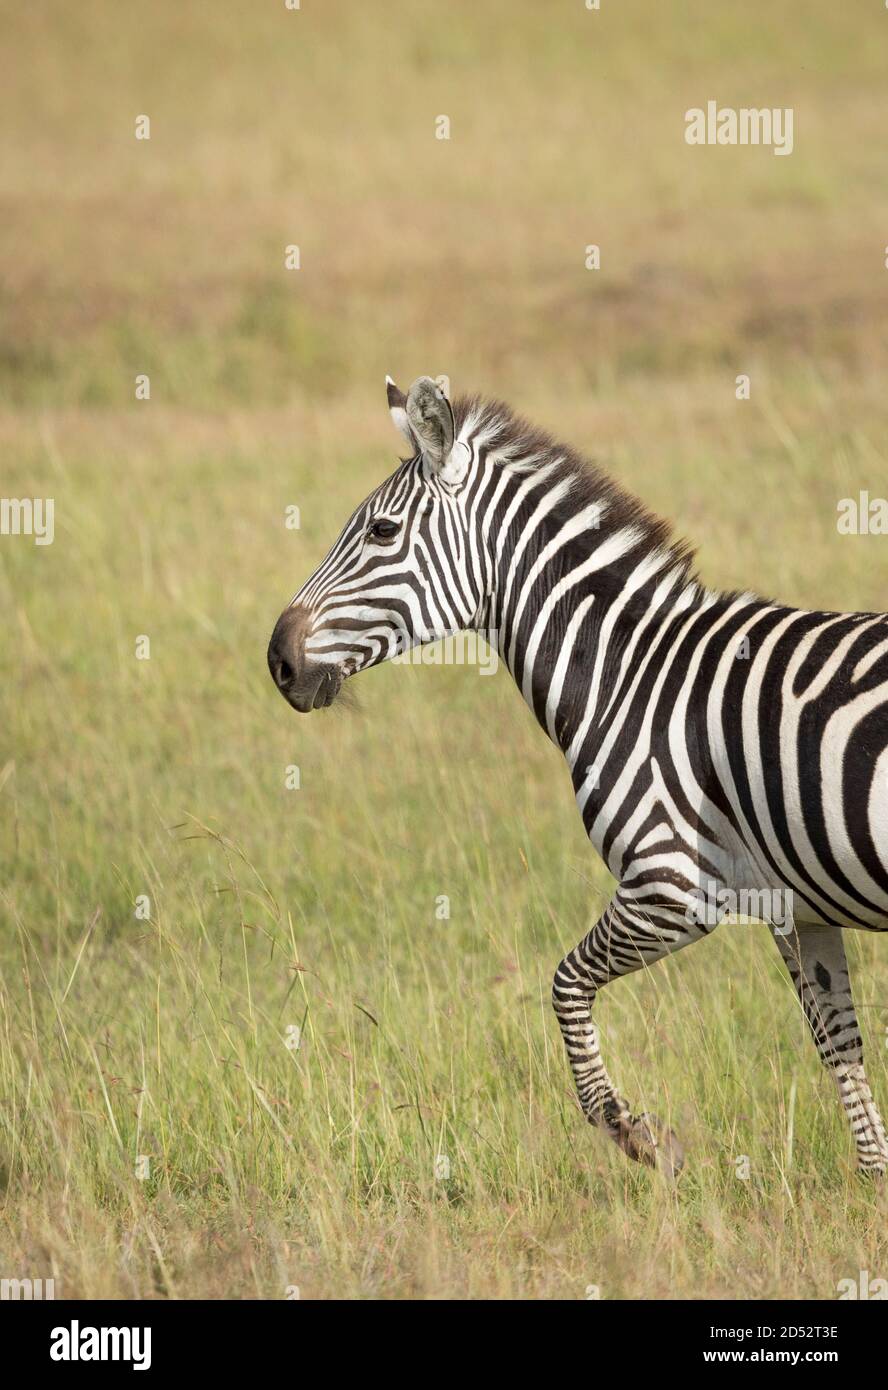 Ritratto verticale di una zebra che cammina nelle pianure di Masai Mara In Kenya Foto Stock